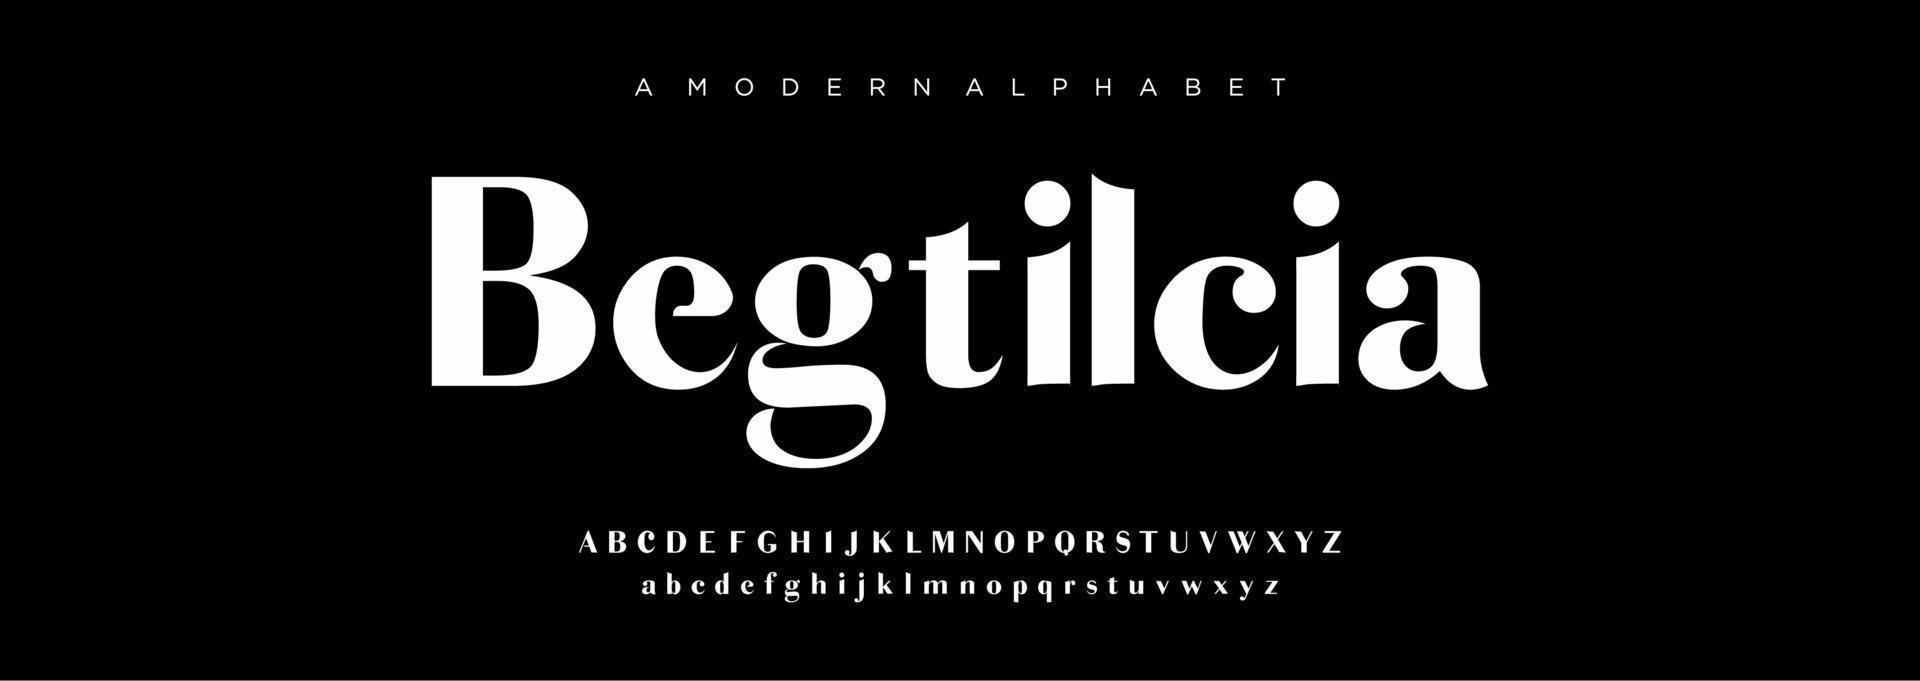 alfabet brev font elegant grymt bra vektor